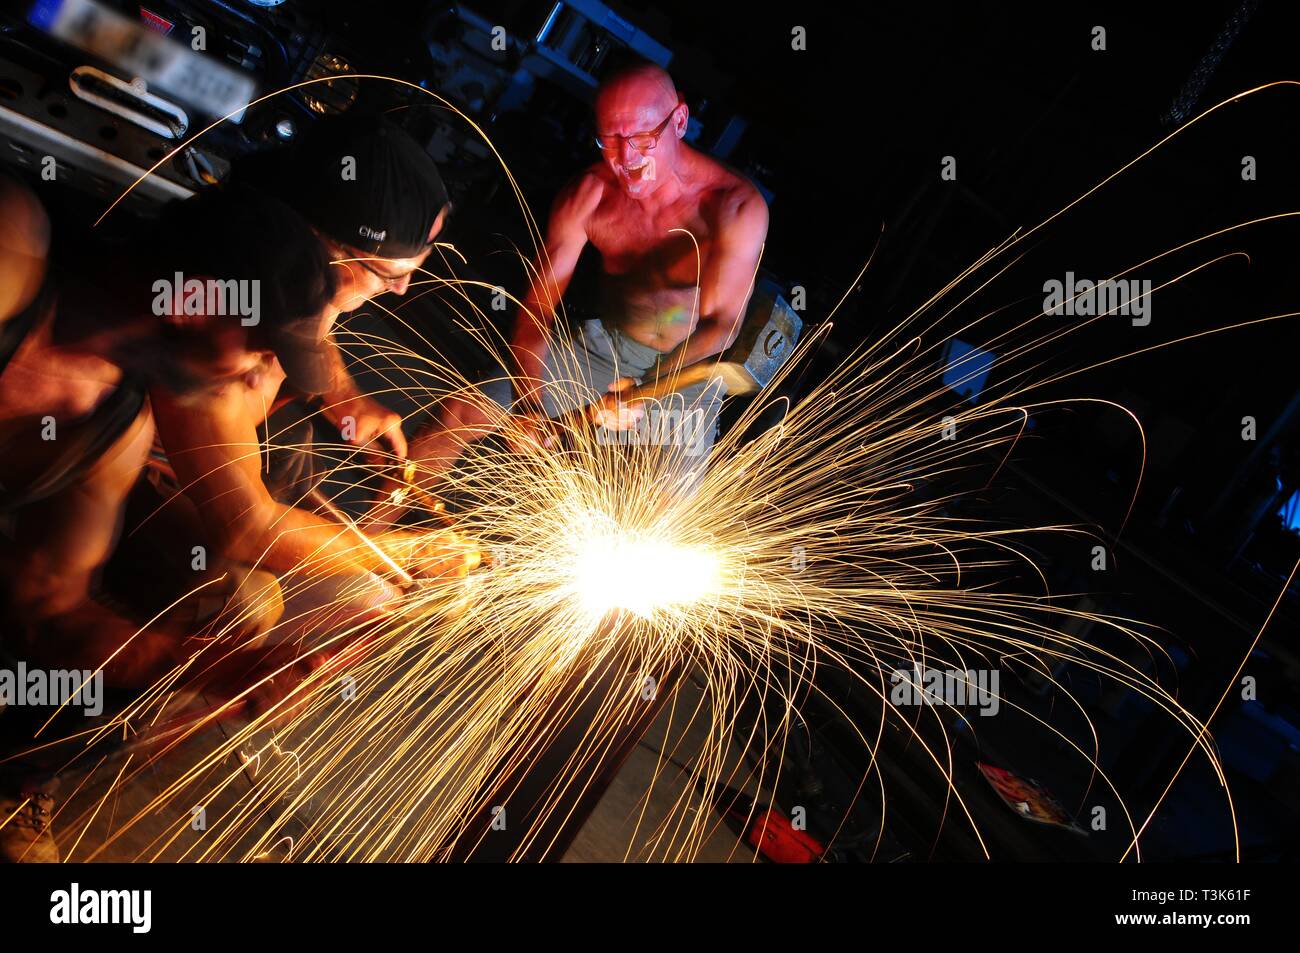 When welding in the workshop Stock Photo